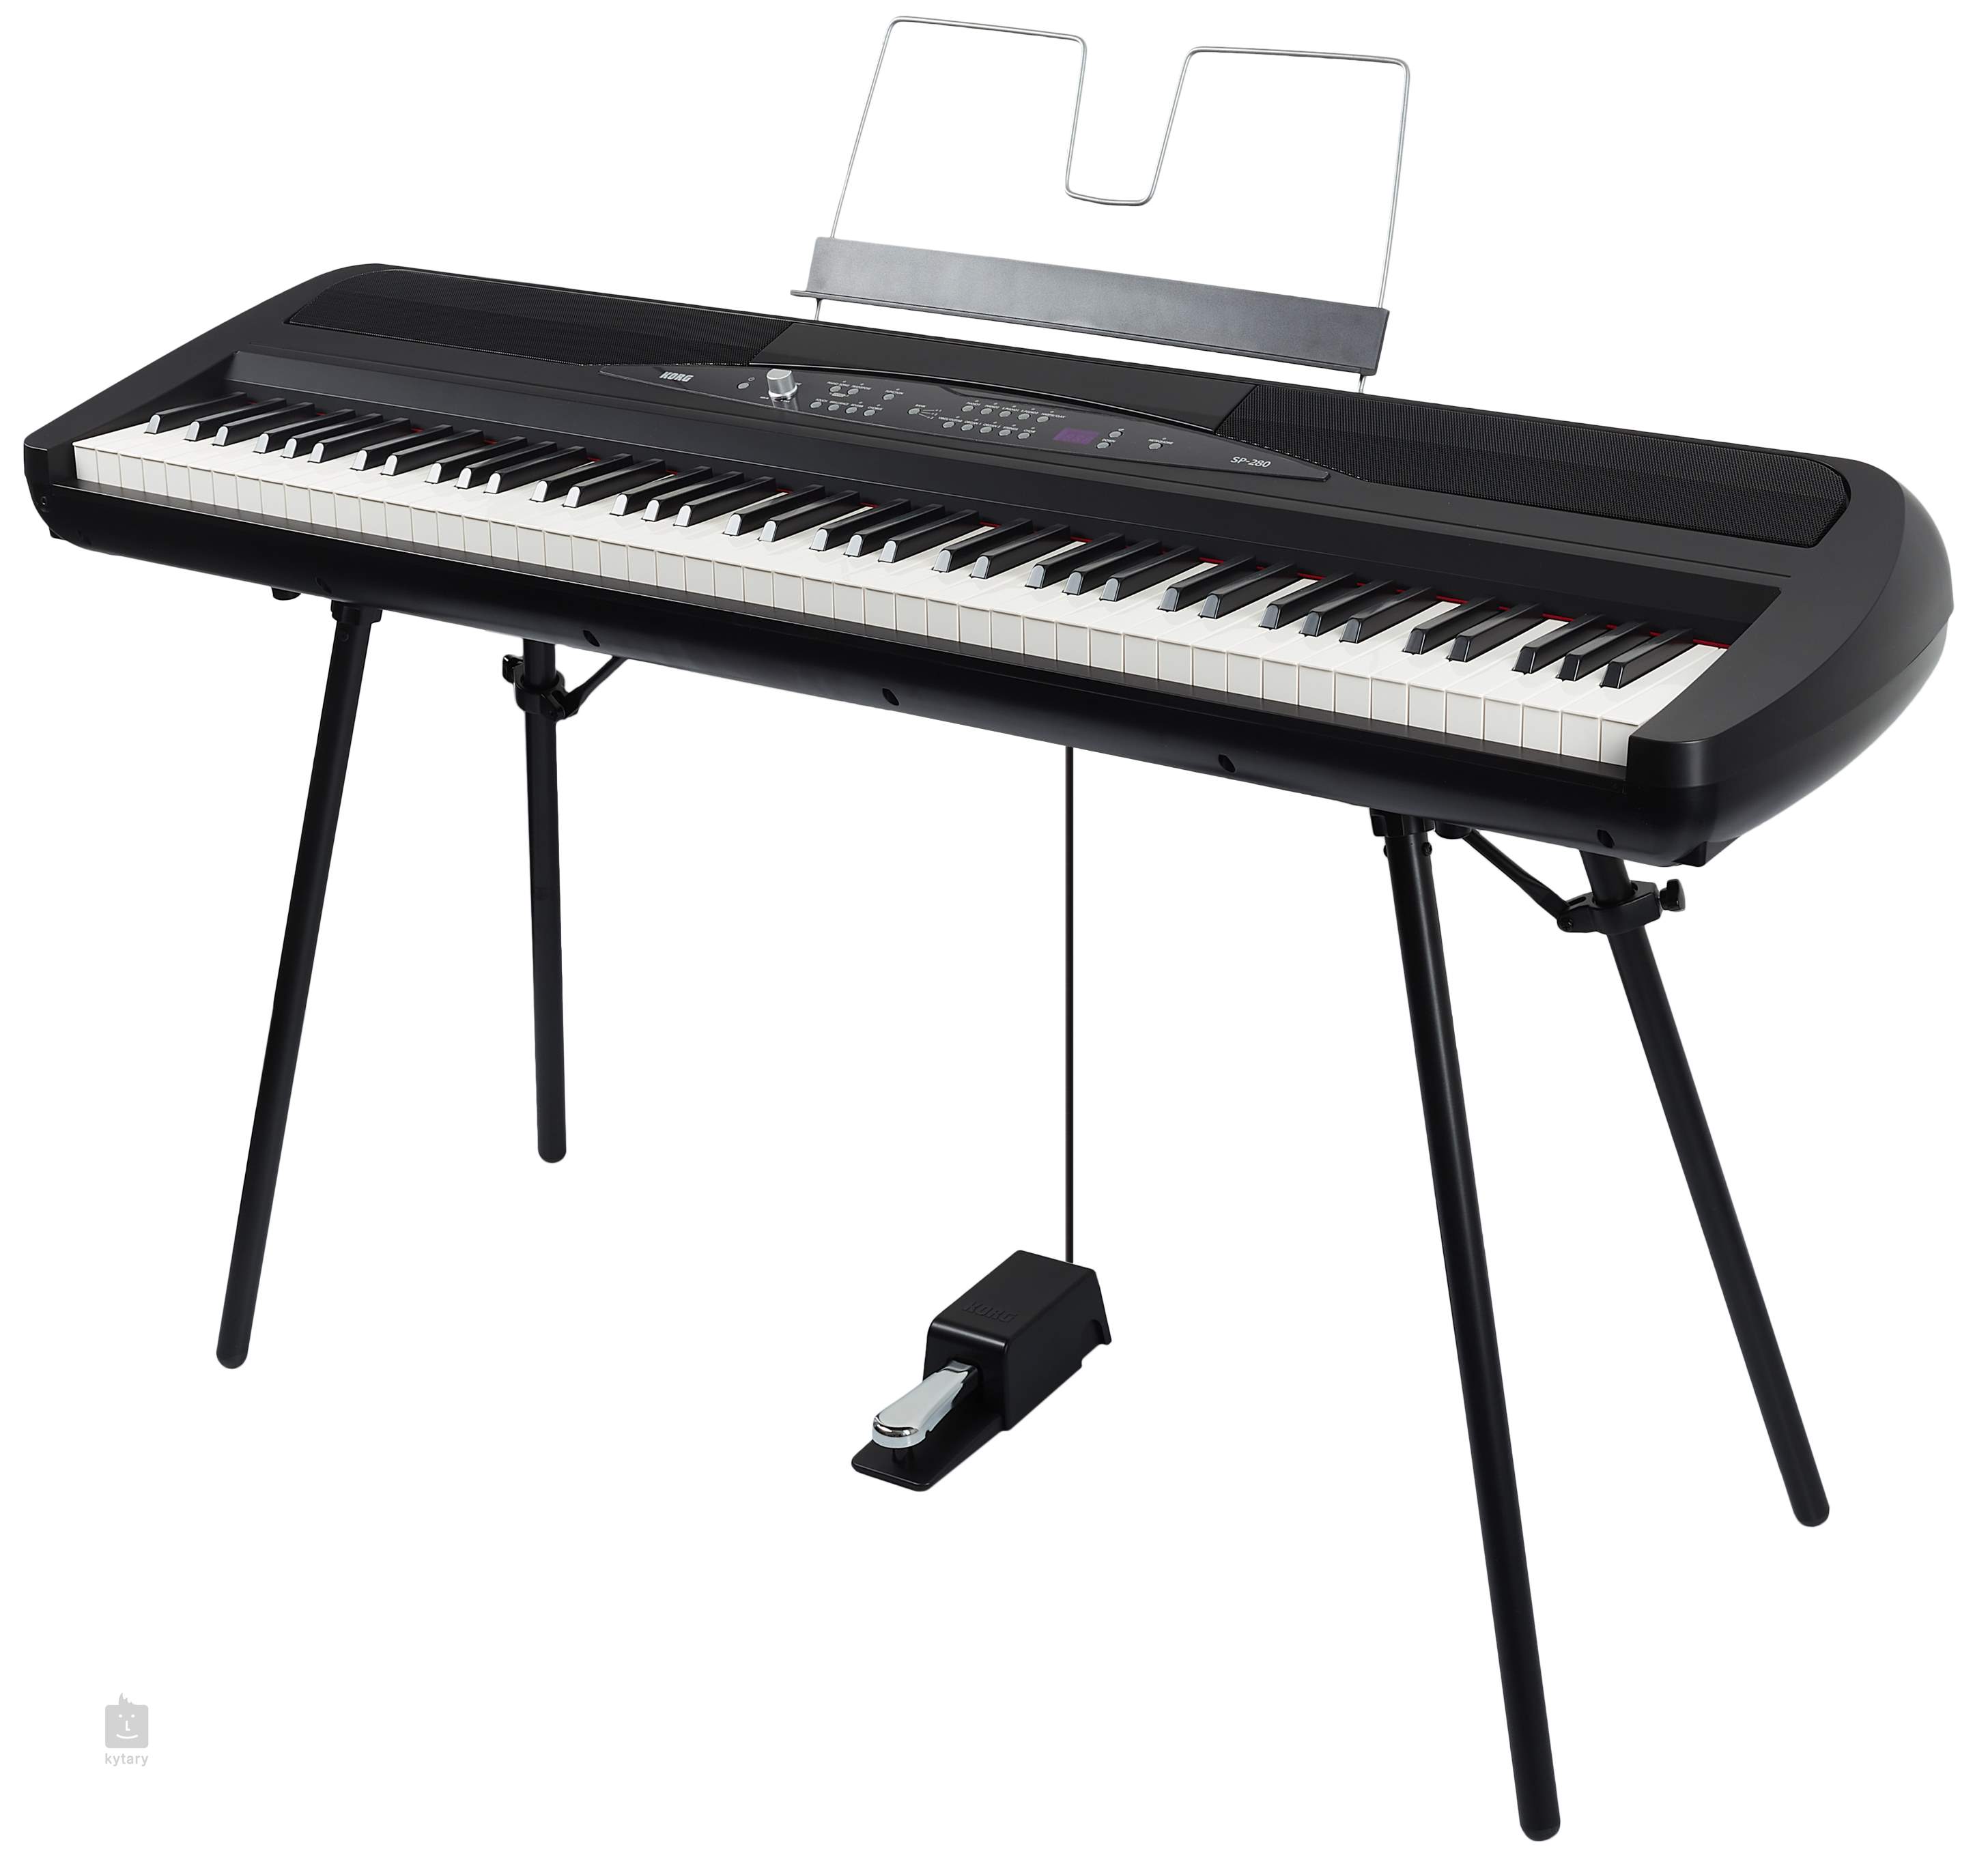 Pack SP-280 BK +Accessoires : Piano Portable Korg 